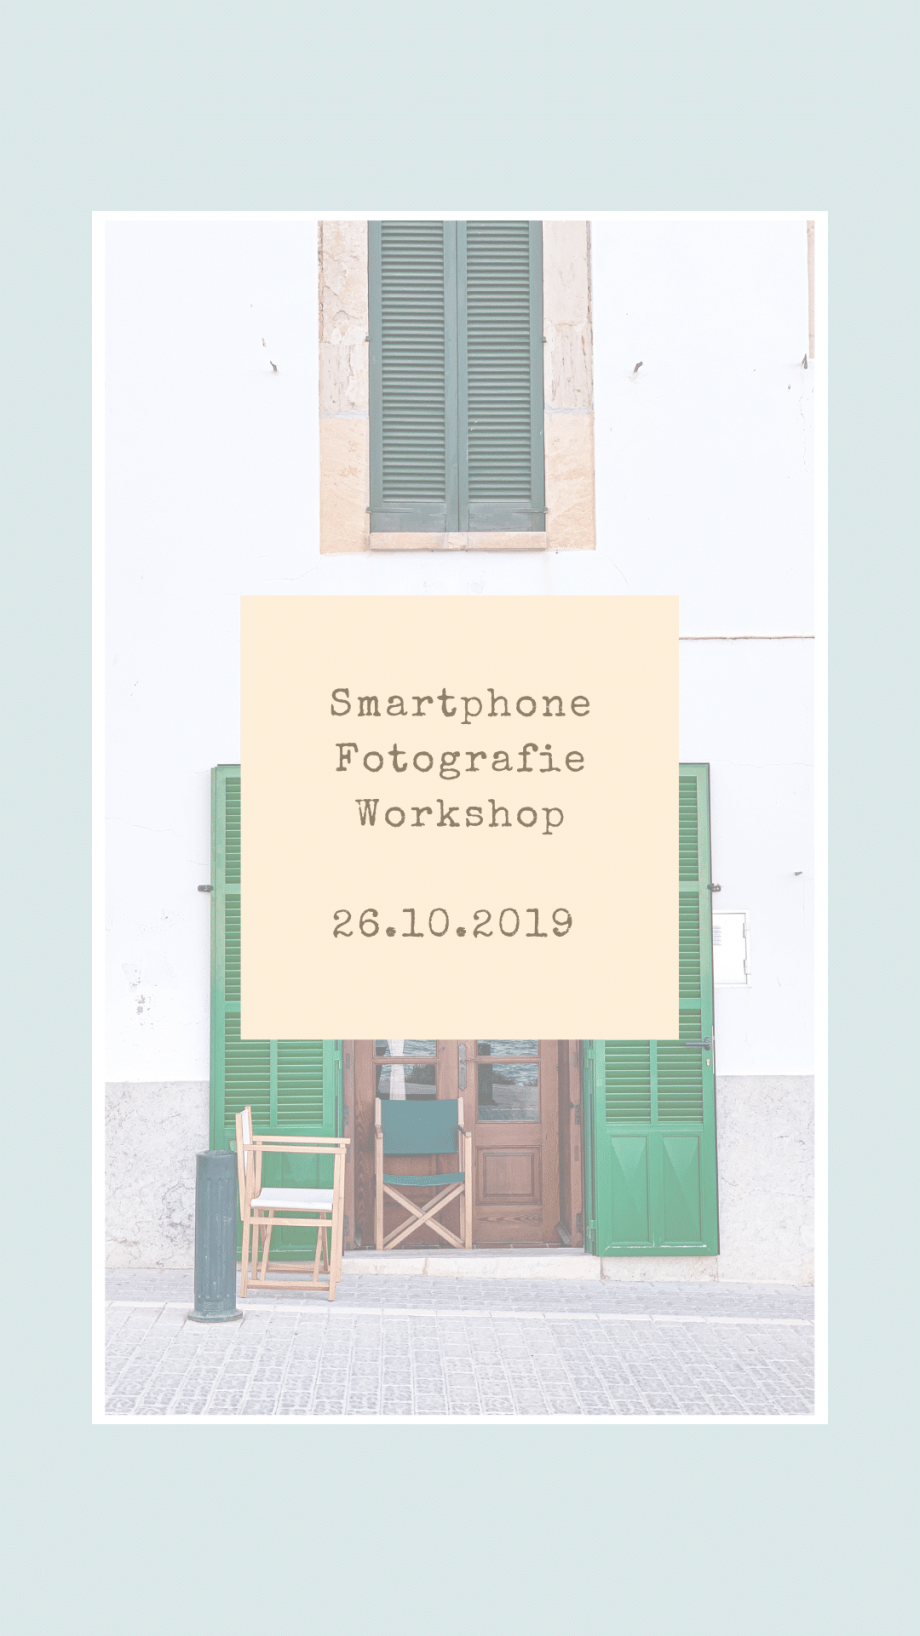 Smartphone Fotografie Workshop am 26.10.2019 in Leipzig!